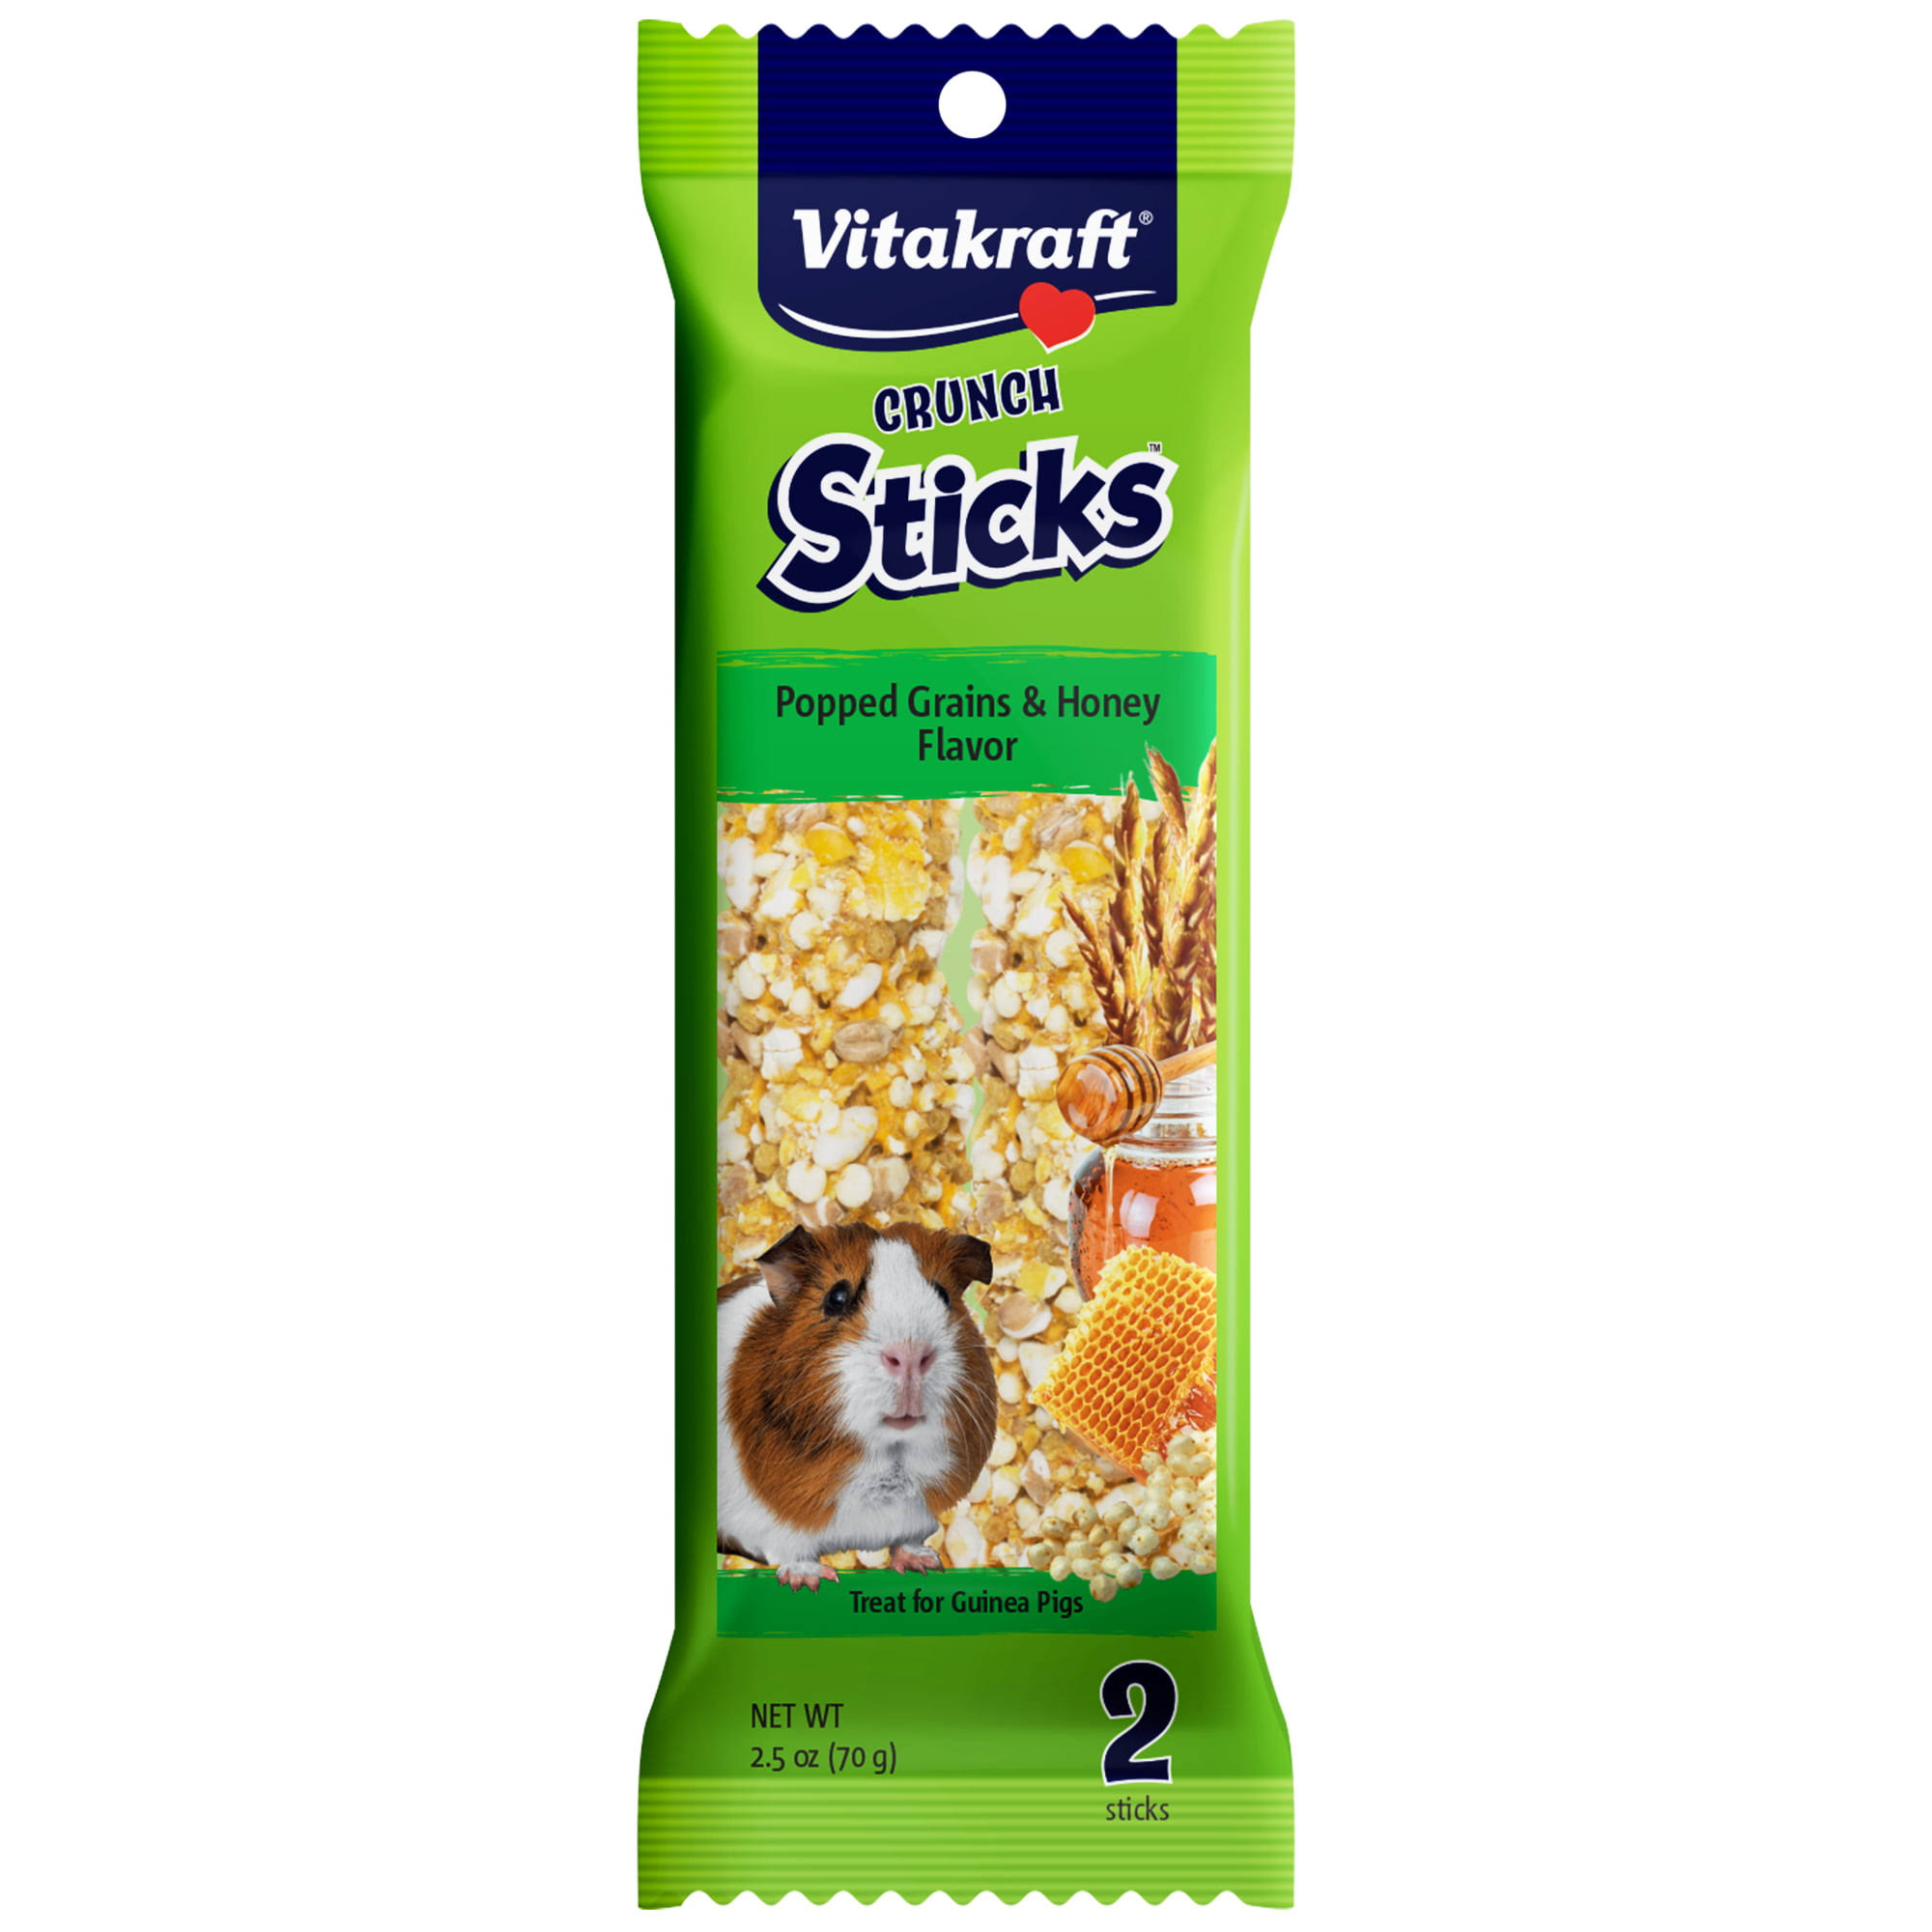 Vitakraft Crunch Sticks - Guinea Pig, x2